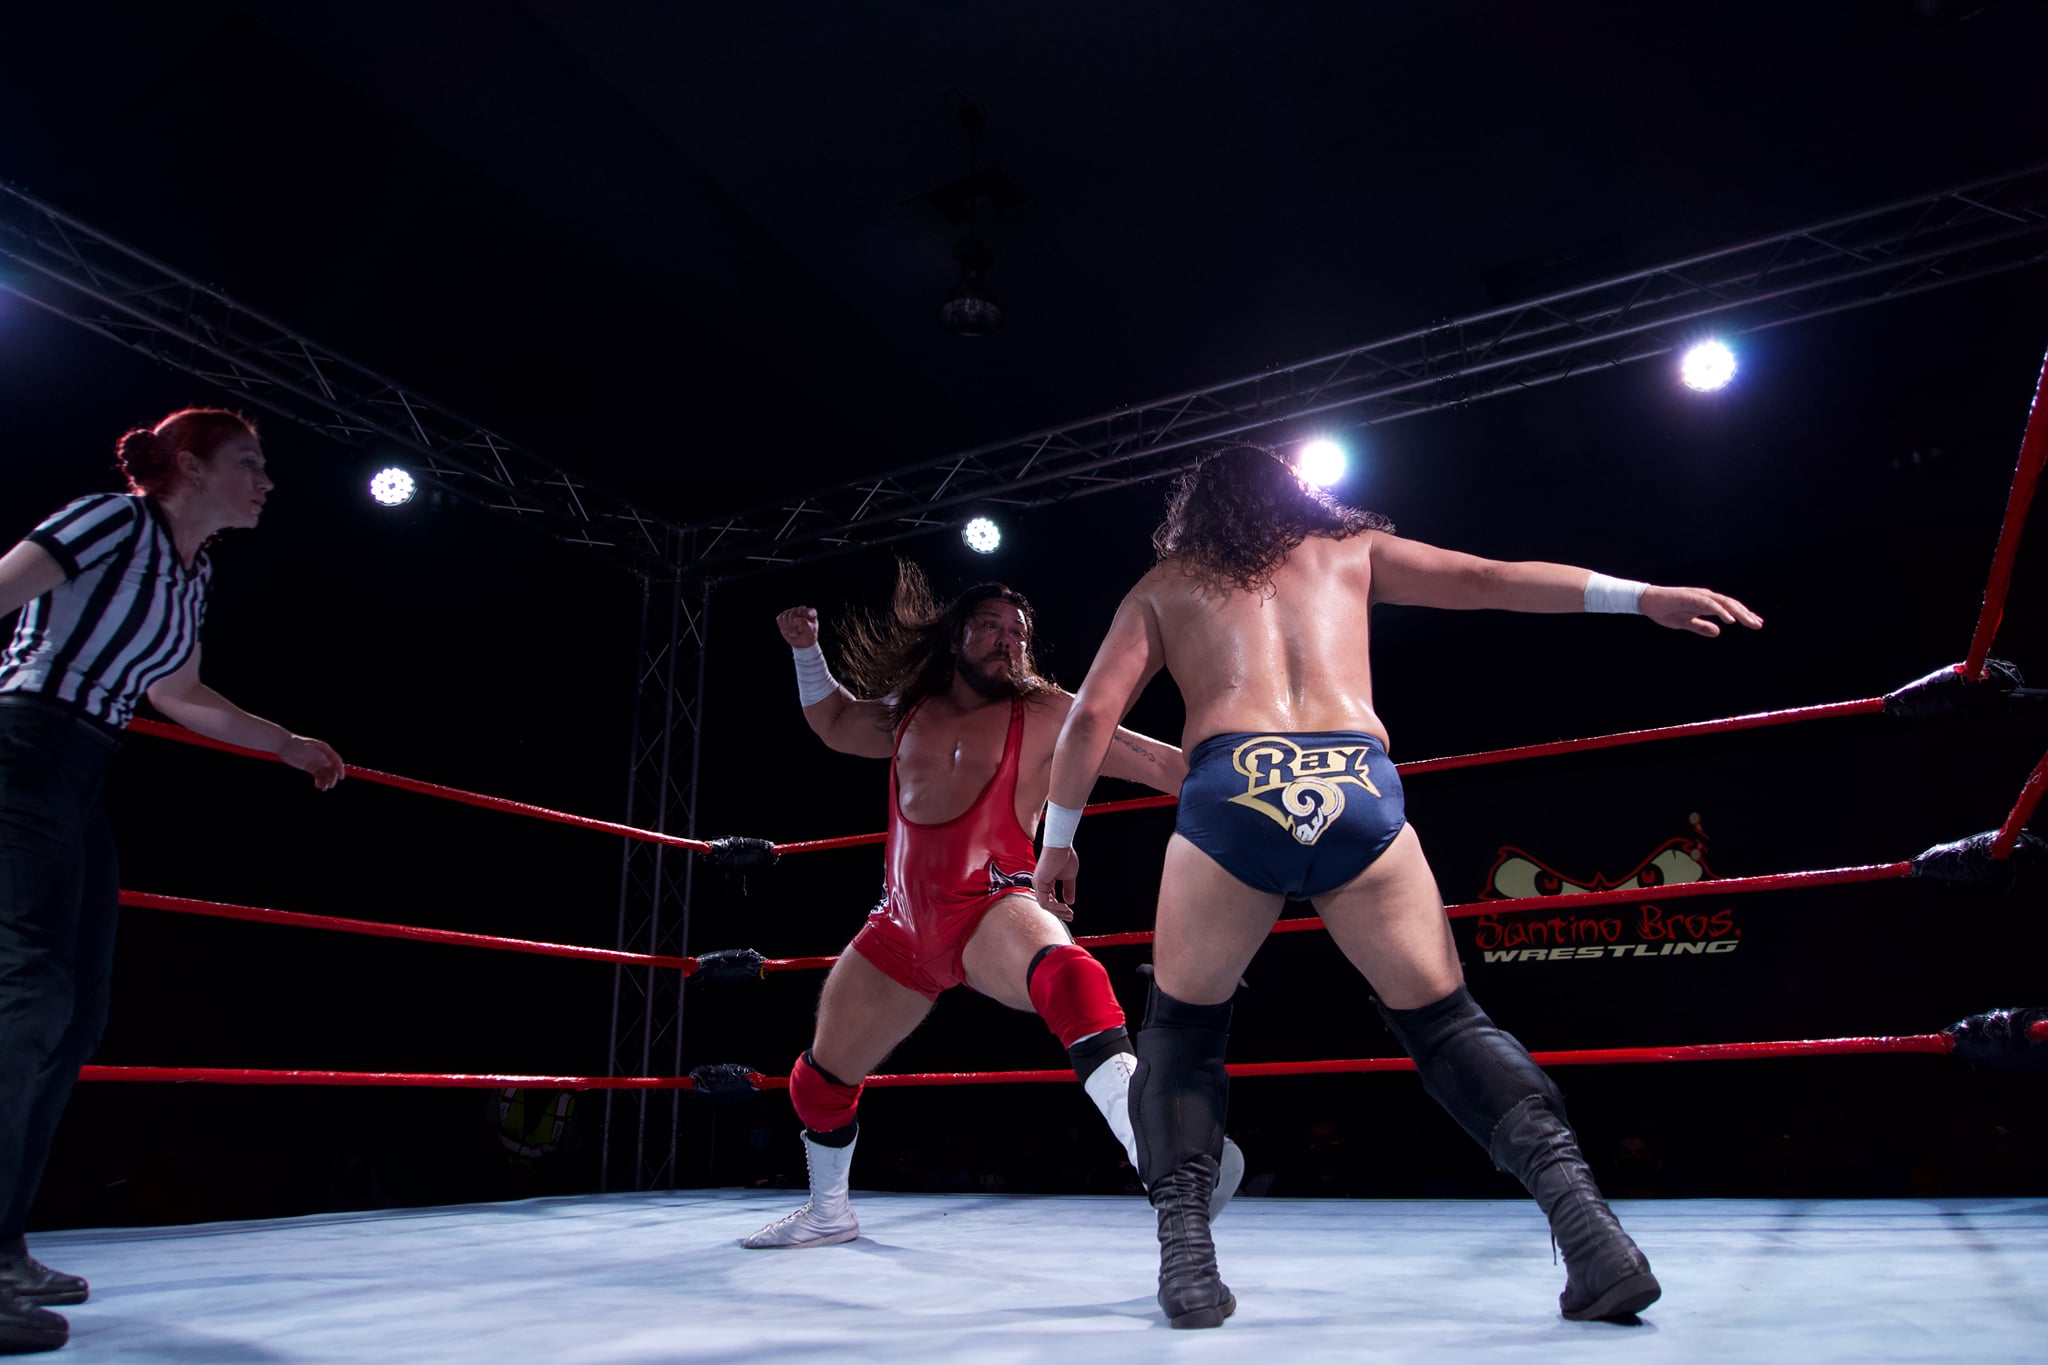 Santino Bros. Wrestling presents: LAST MAN STANDING Tickets, Sat